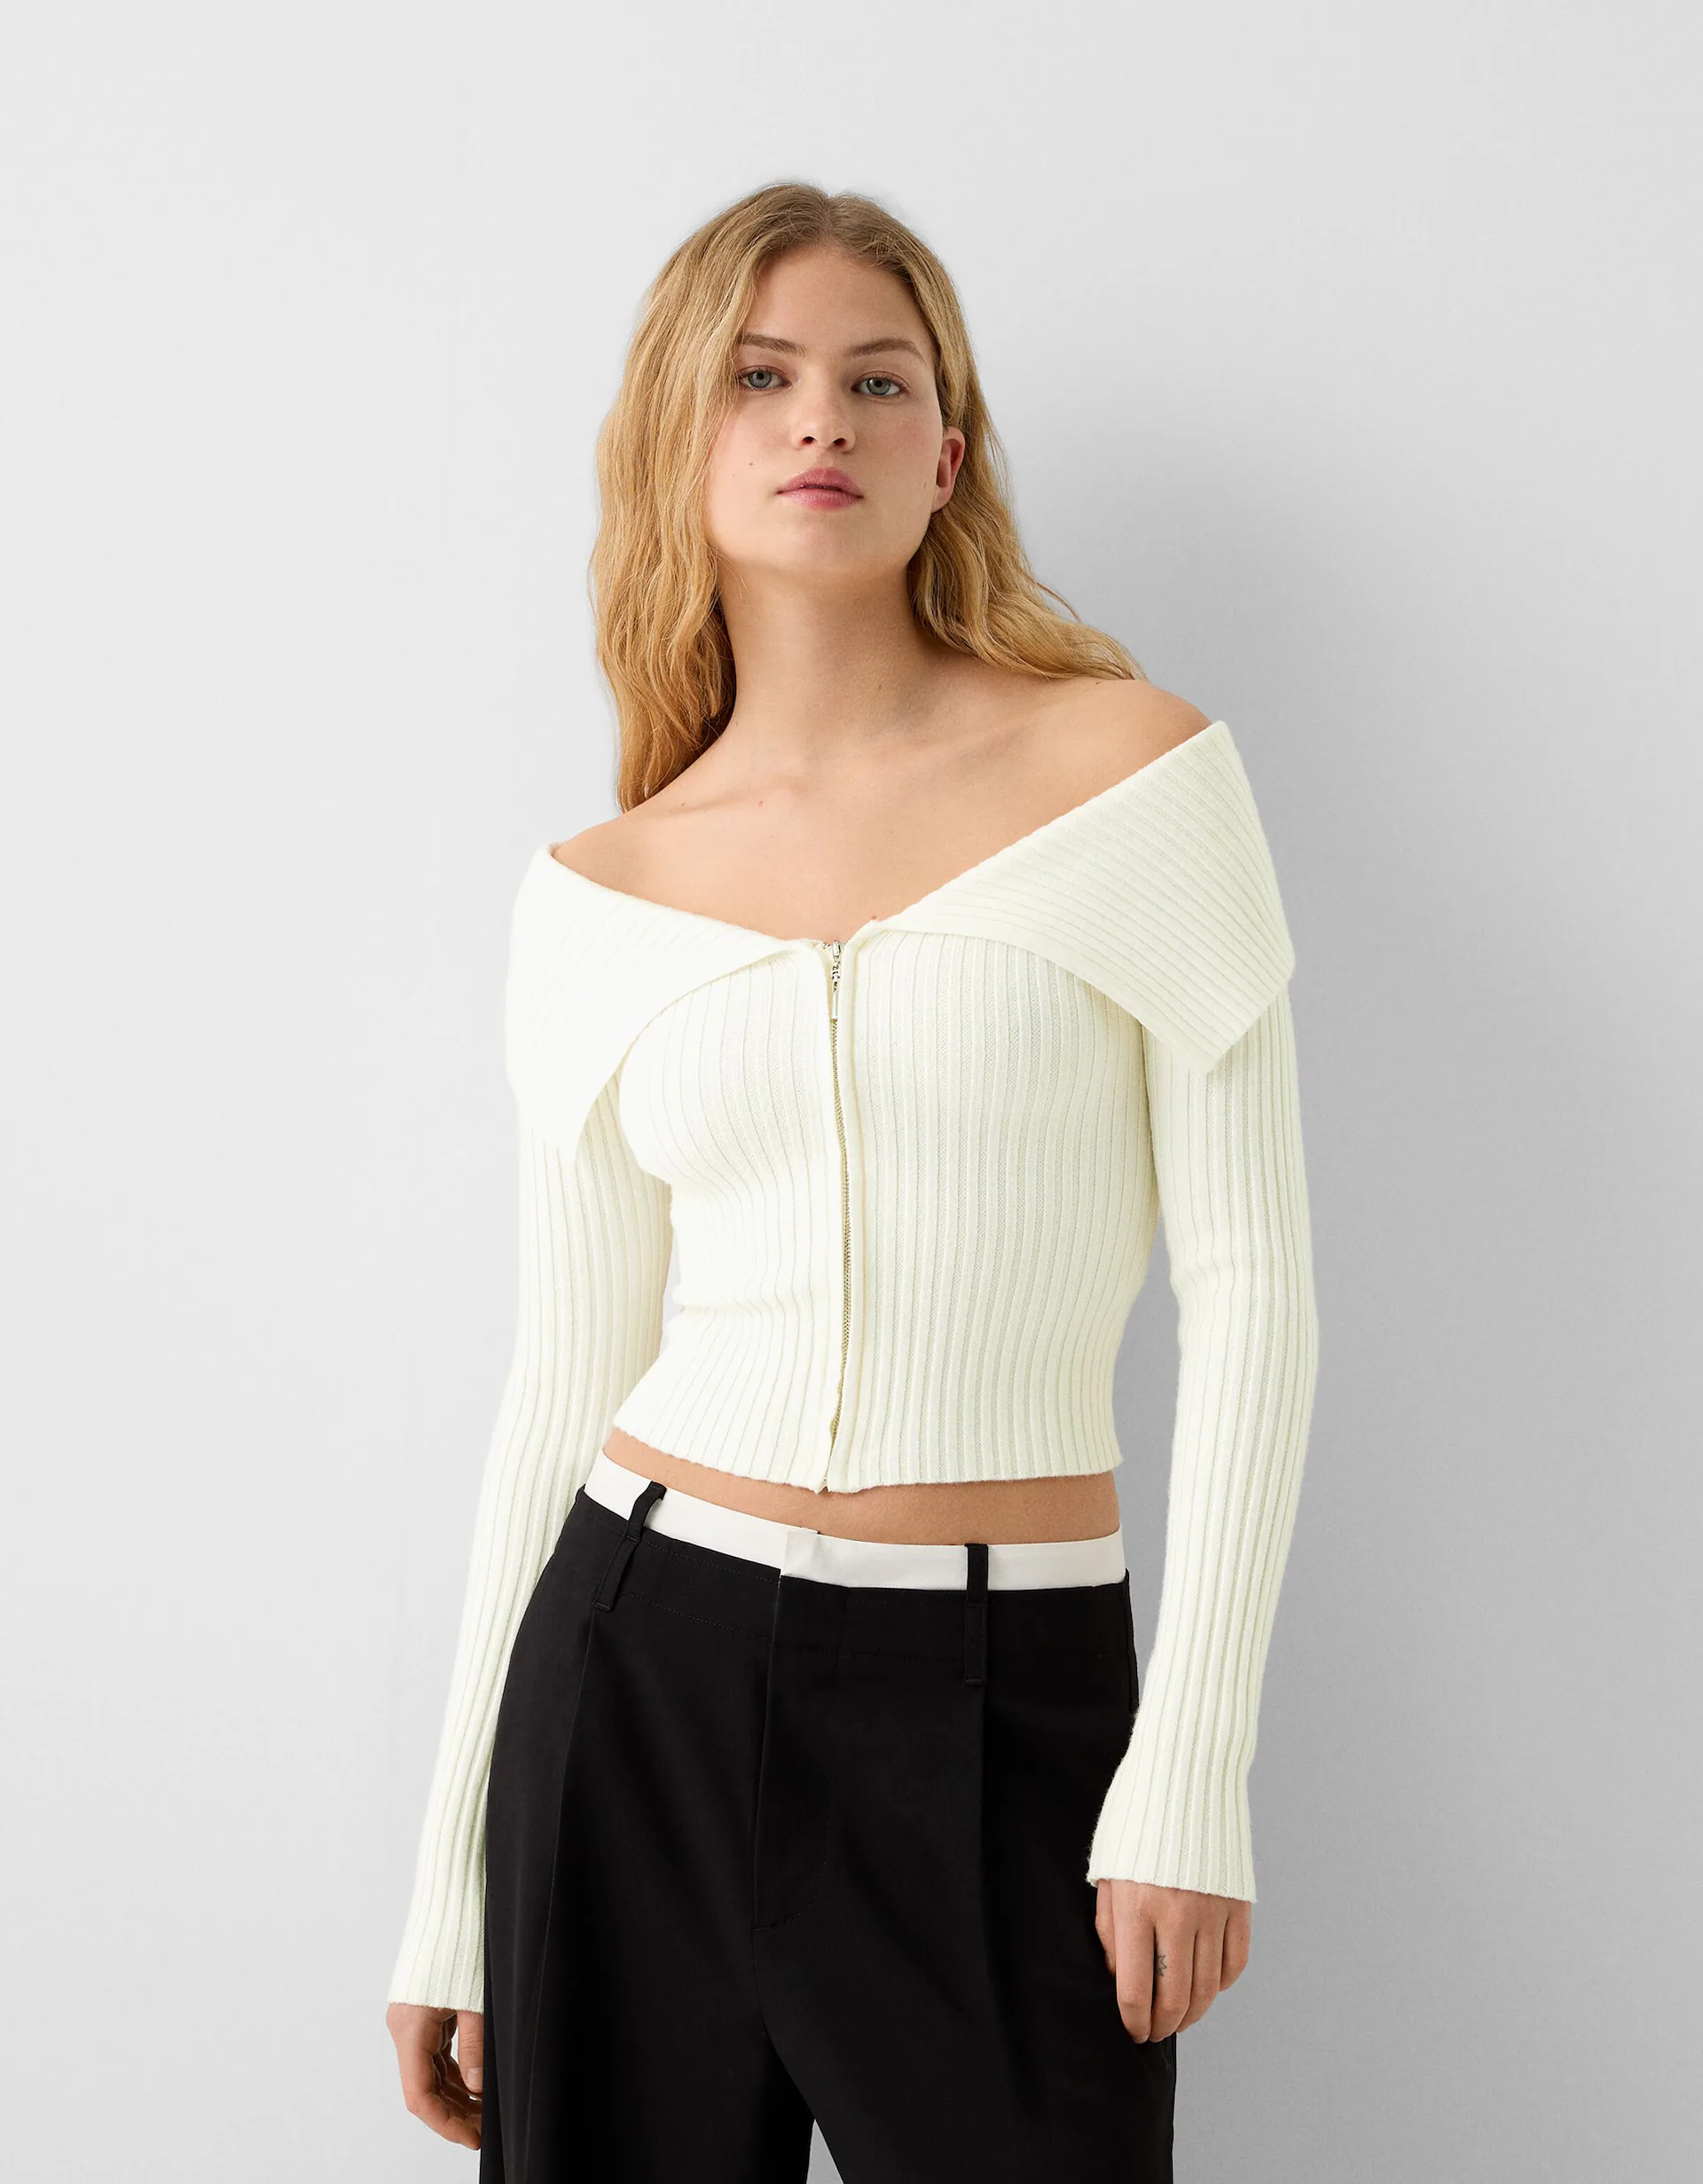 Bardot neck zip-up cardigan - Sweaters and cardigans - Women | Bershka